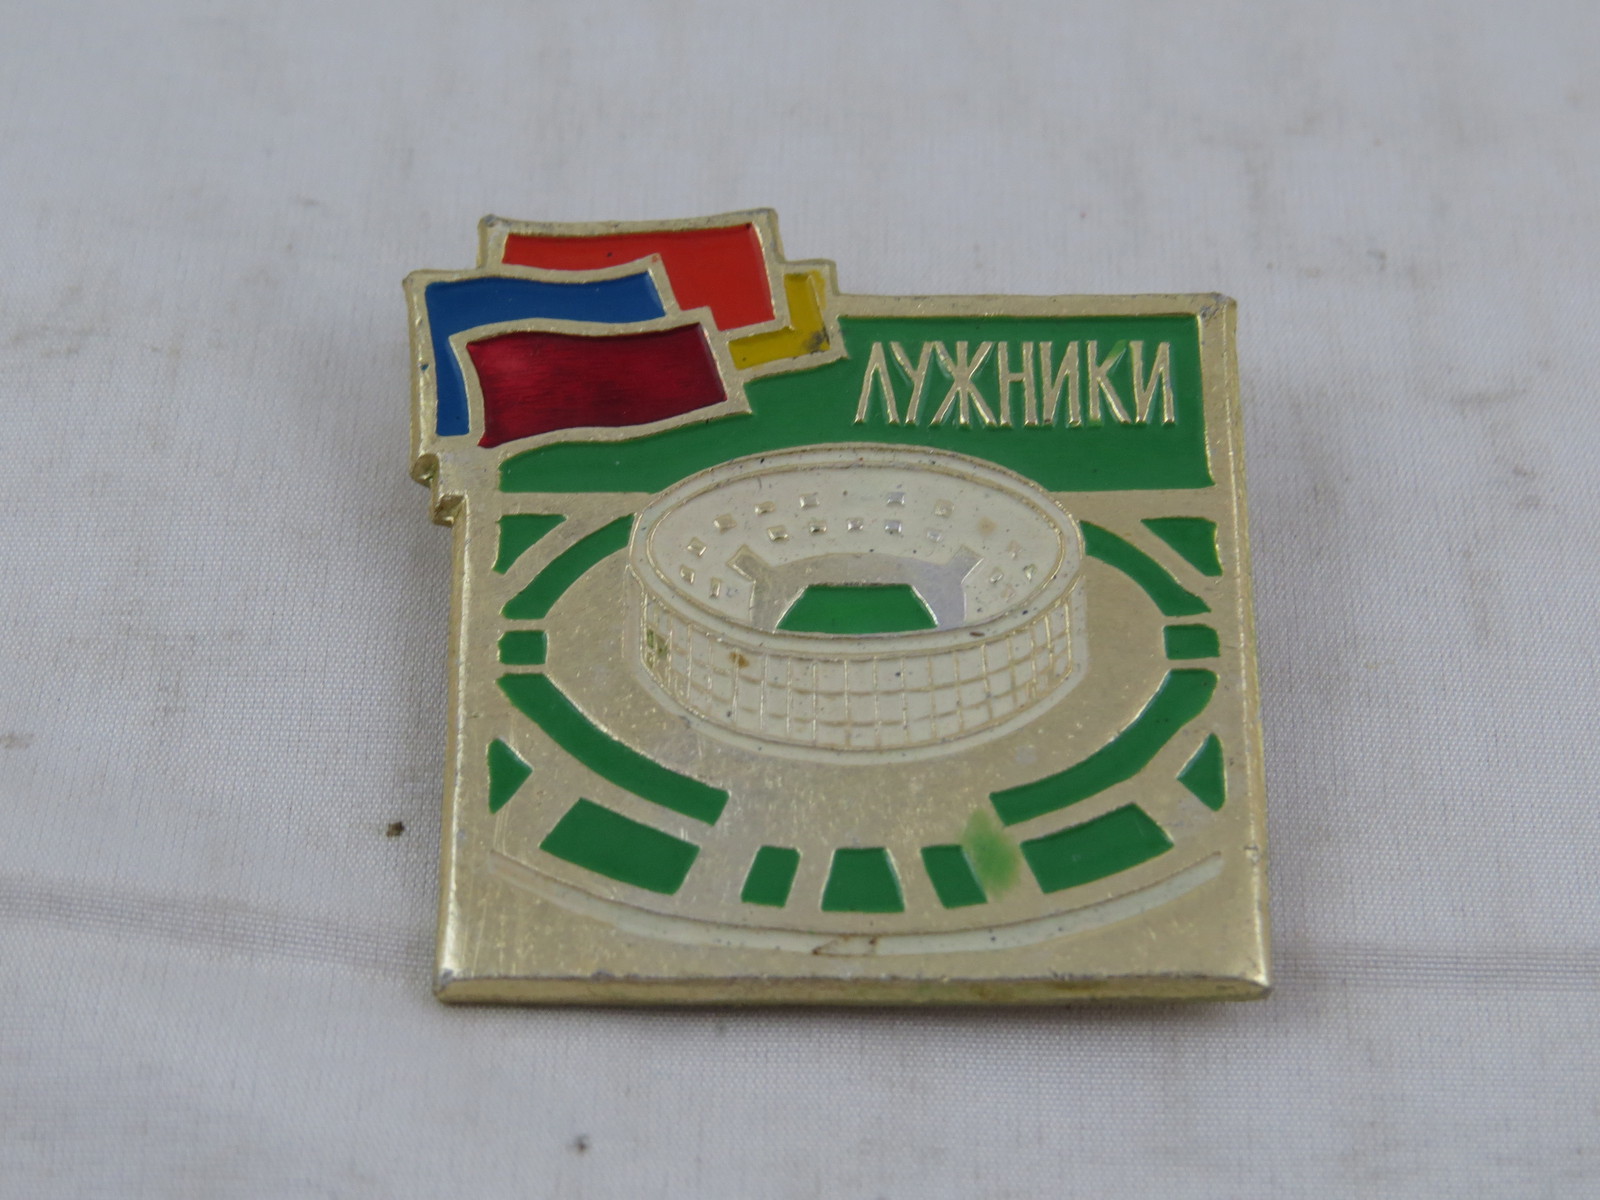 Primary image for 1980 Summer Games Olympic Pin - Luzhniki Stadium - Stamped Pin 